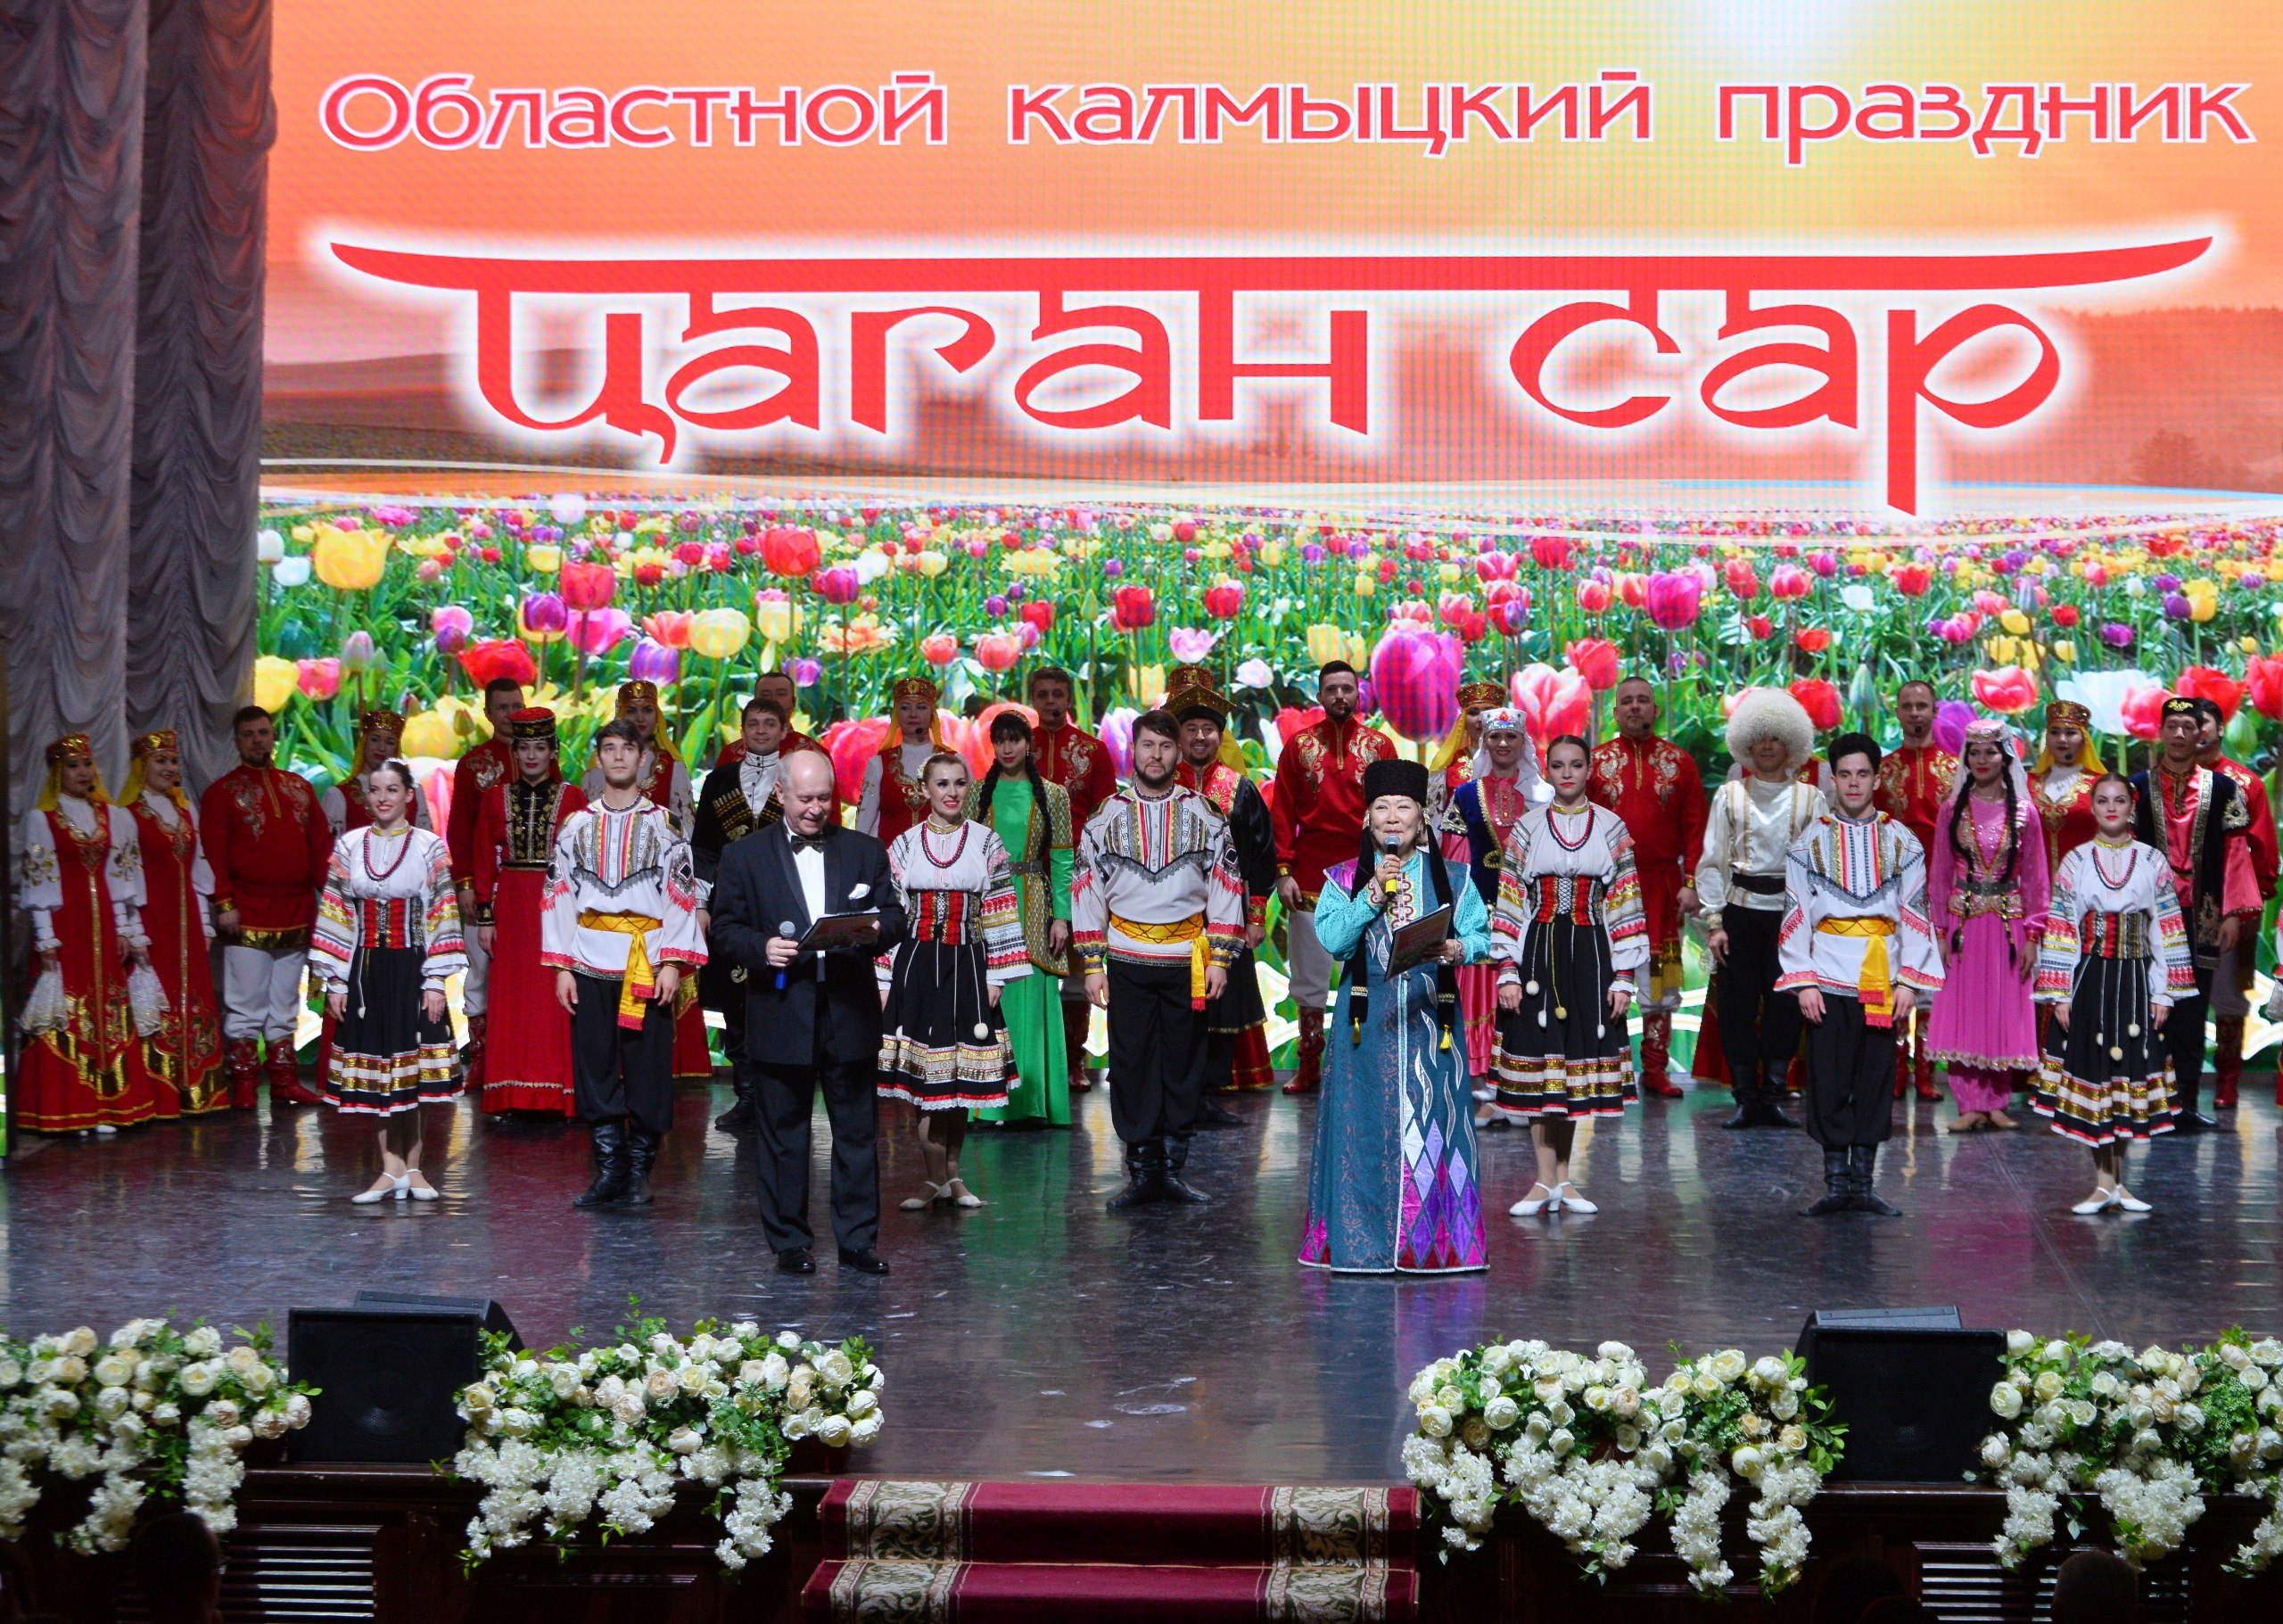 В Астрахани отметили калмыцкий праздник Цаган Сар